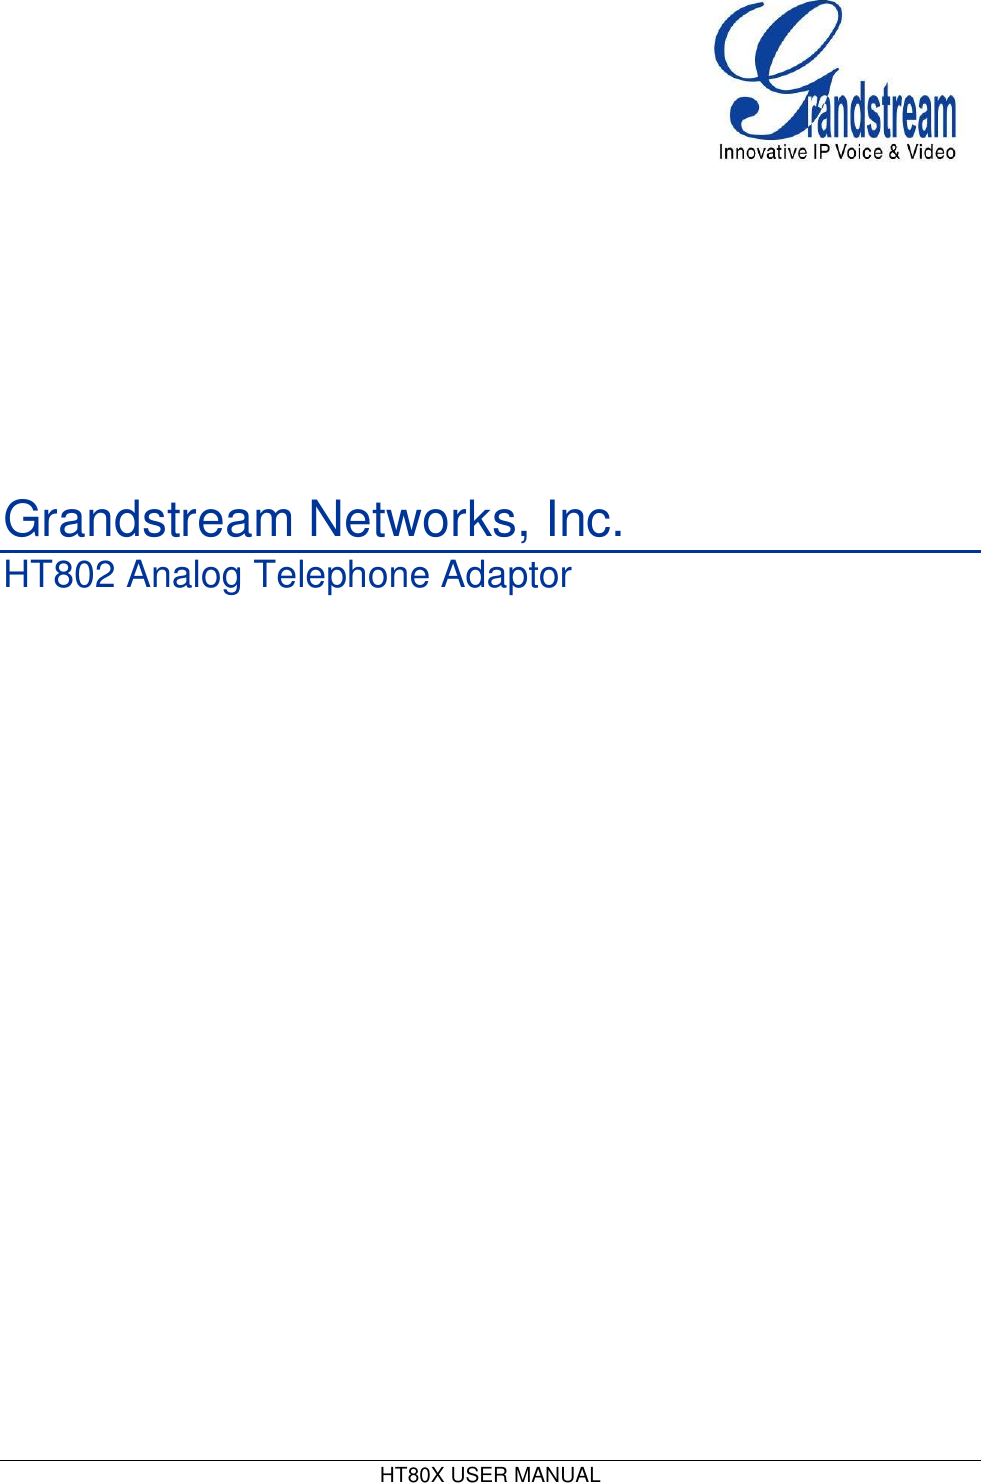  HT80X USER MANUAL               Grandstream Networks, Inc. HT802 Analog Telephone Adaptor                 